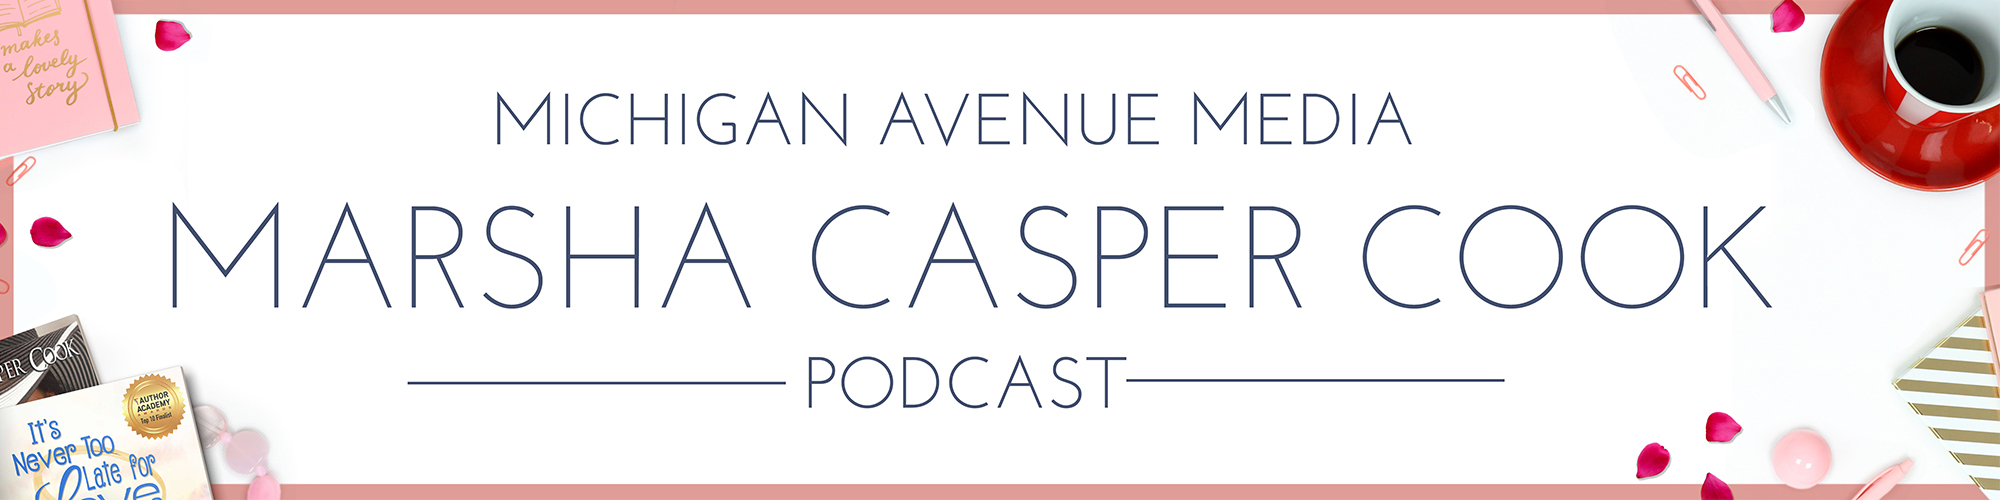 Marsha Casper Cook Podcast